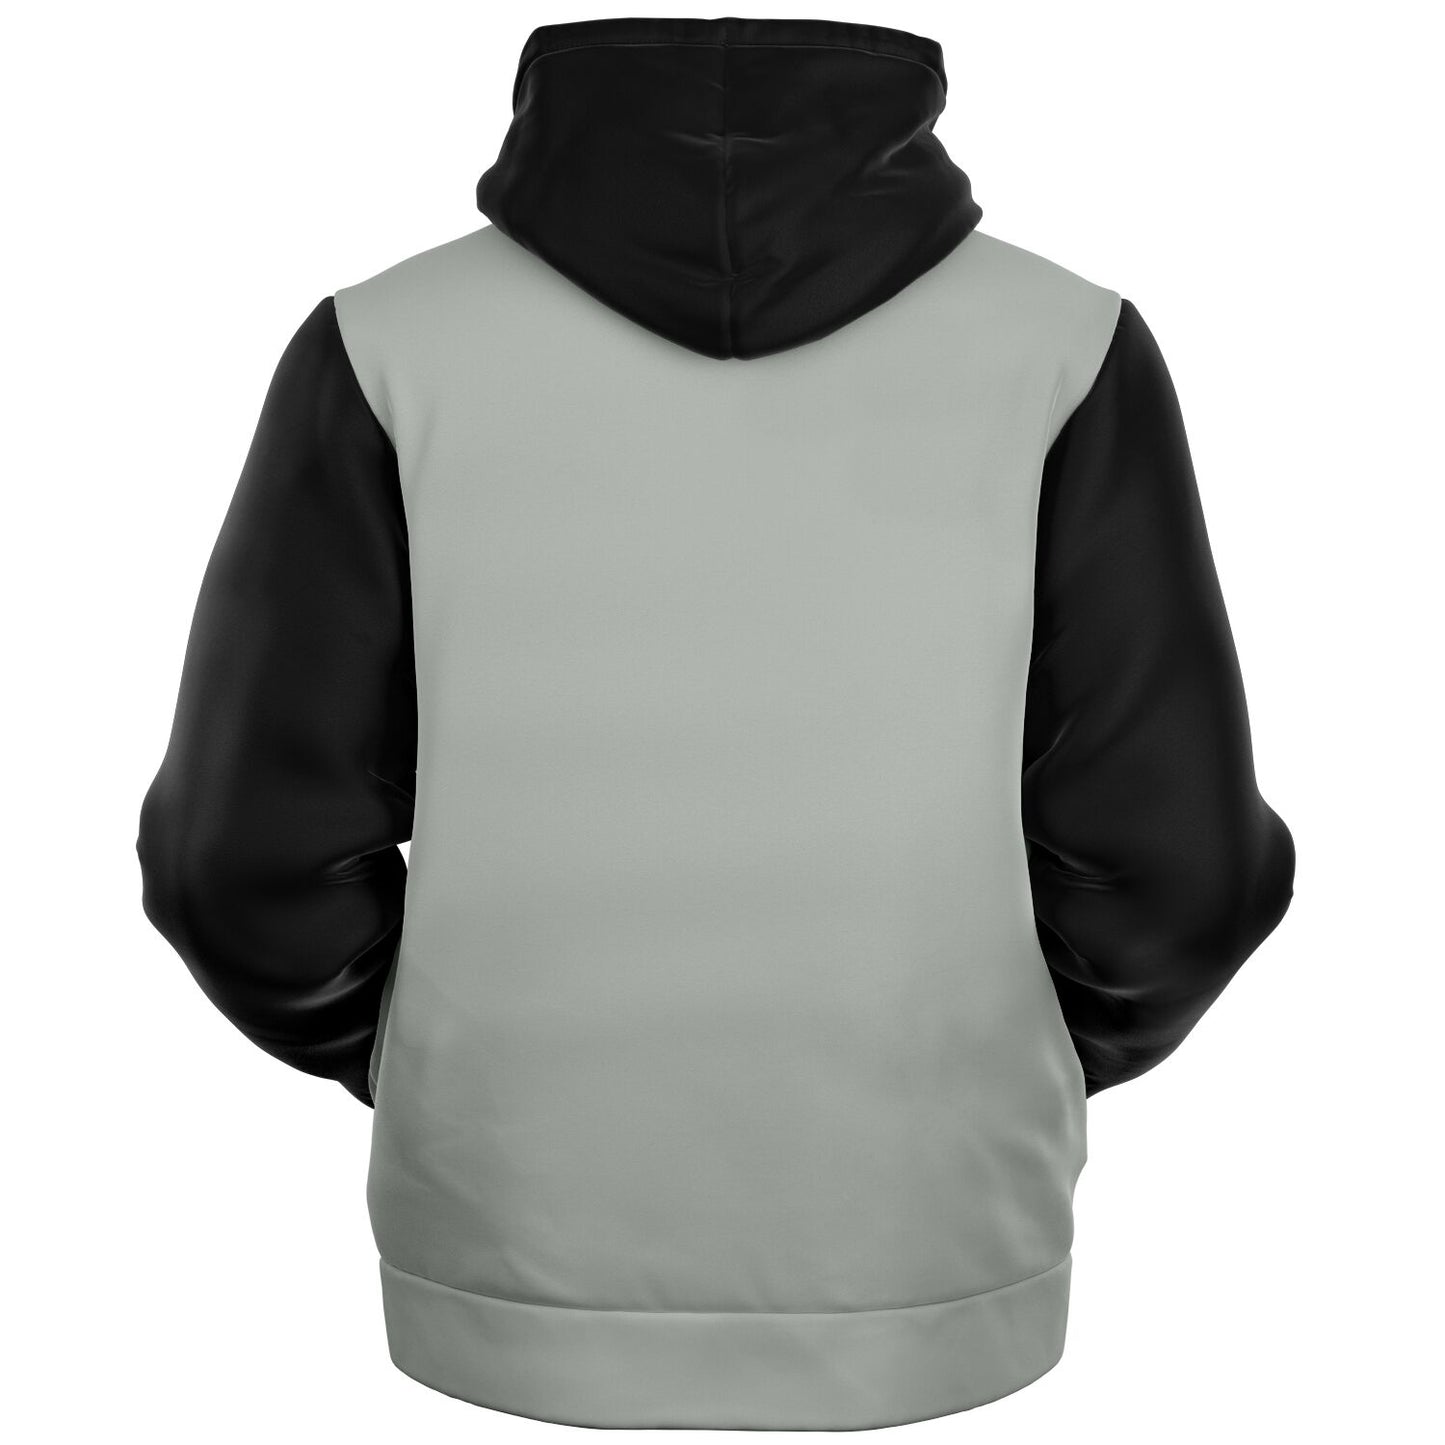 GreyBlock UNISEX Zip Up Youth Coat (Husky Fit)